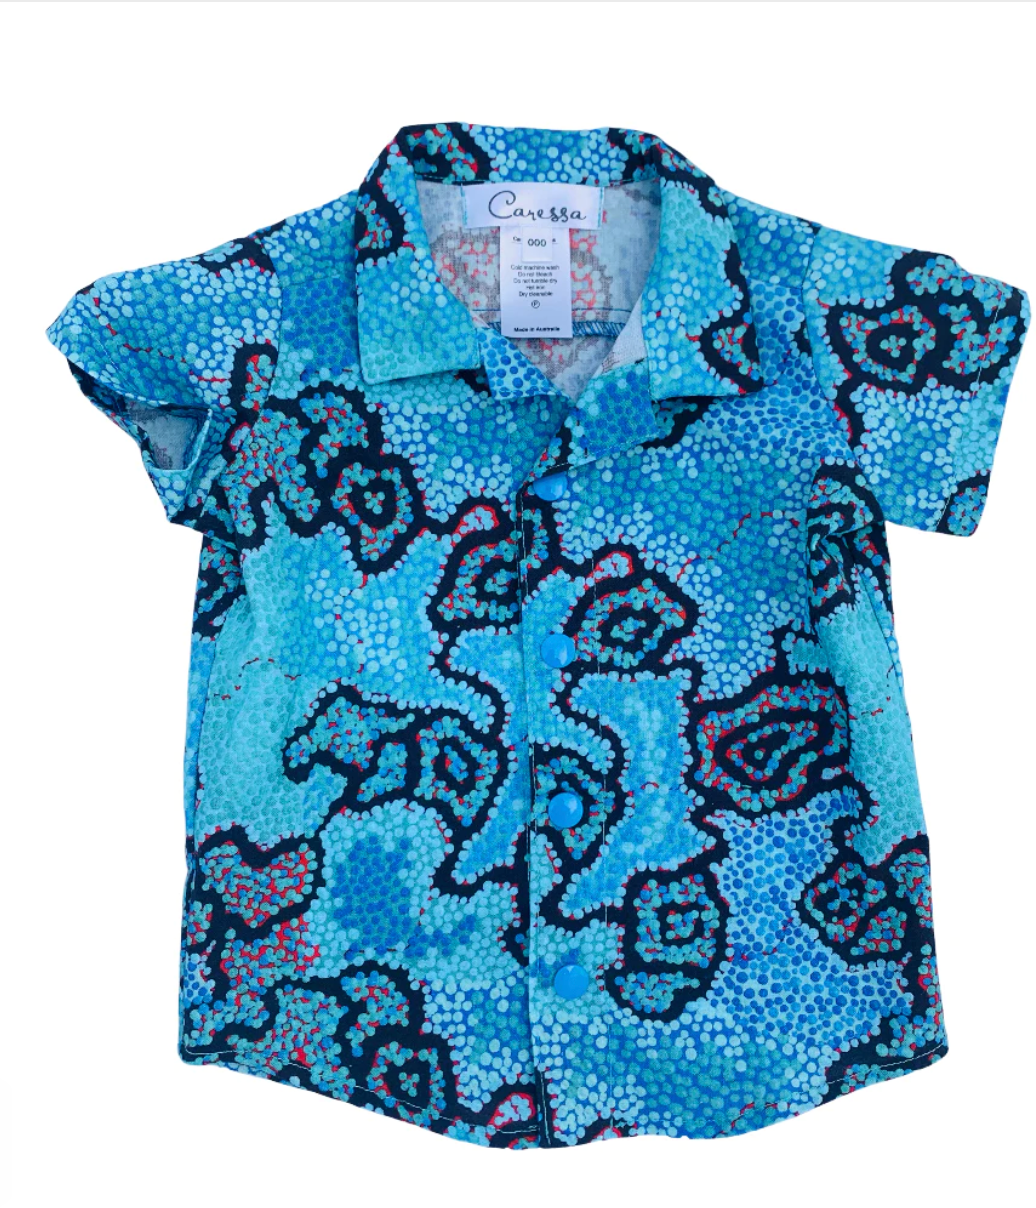 Caressa Designs - Aqua Water Dreaming Shirt